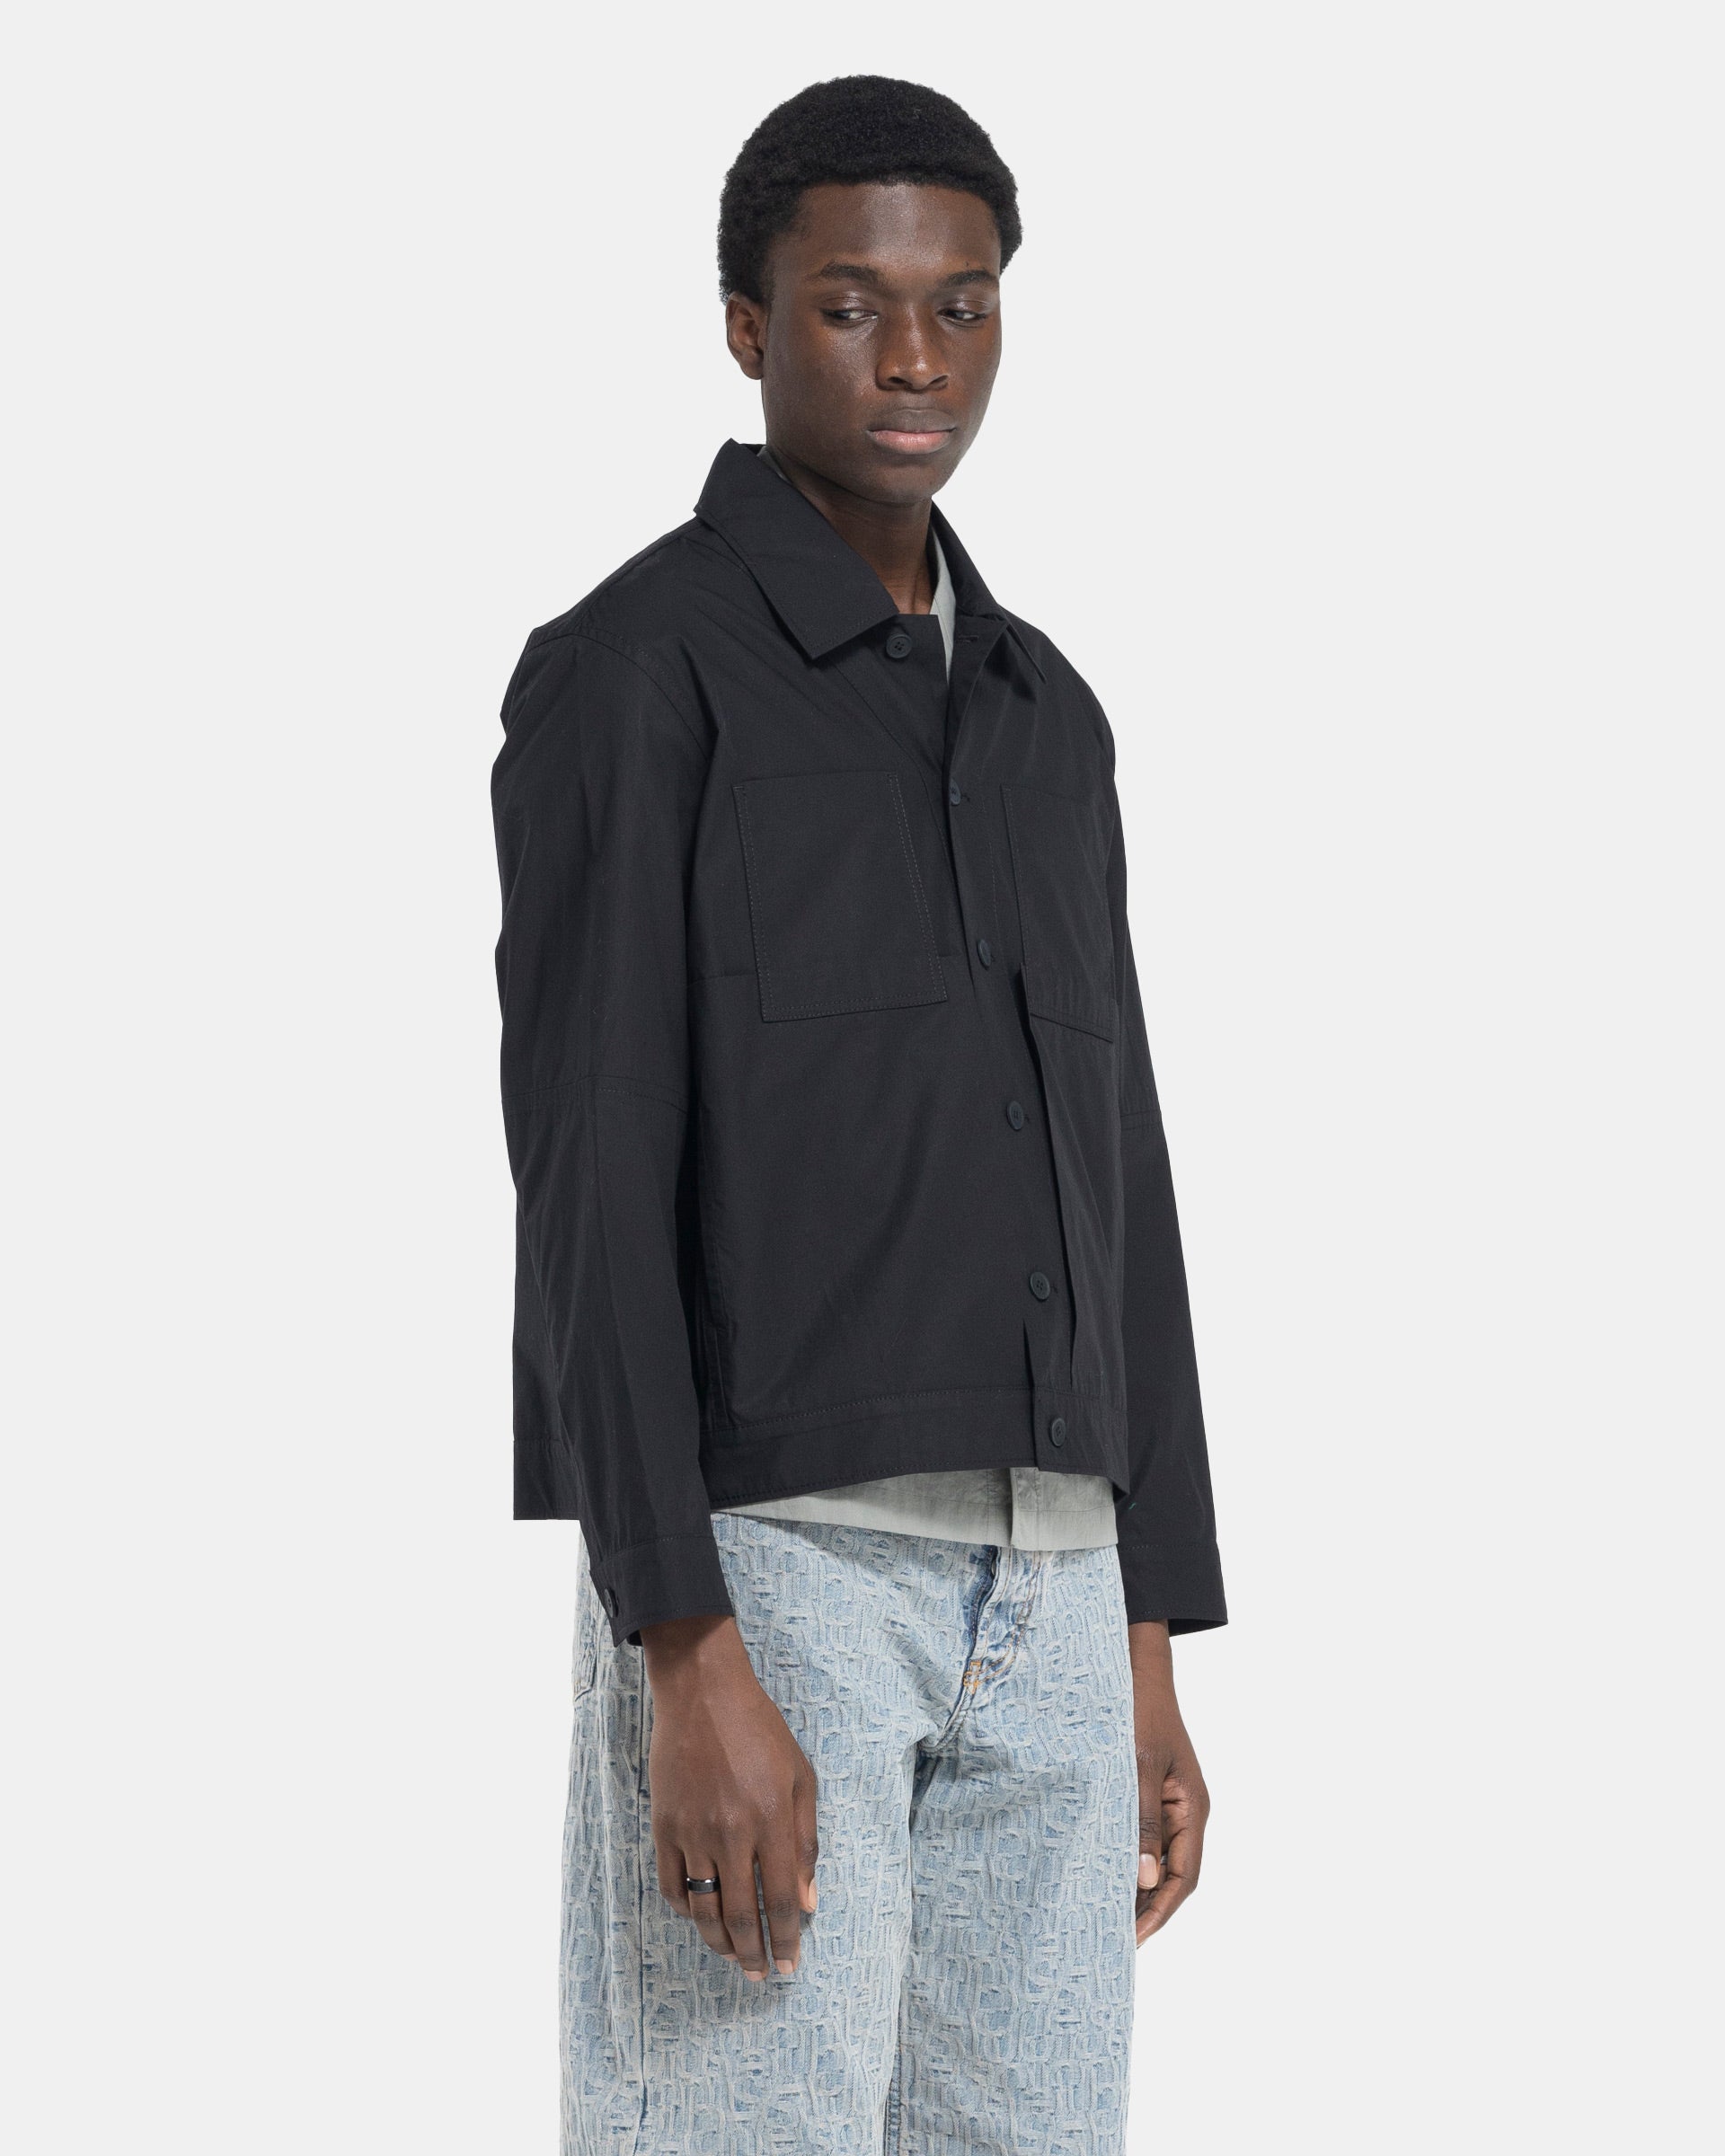 Model wearing Craig Green Worker Jacket in Black on white background